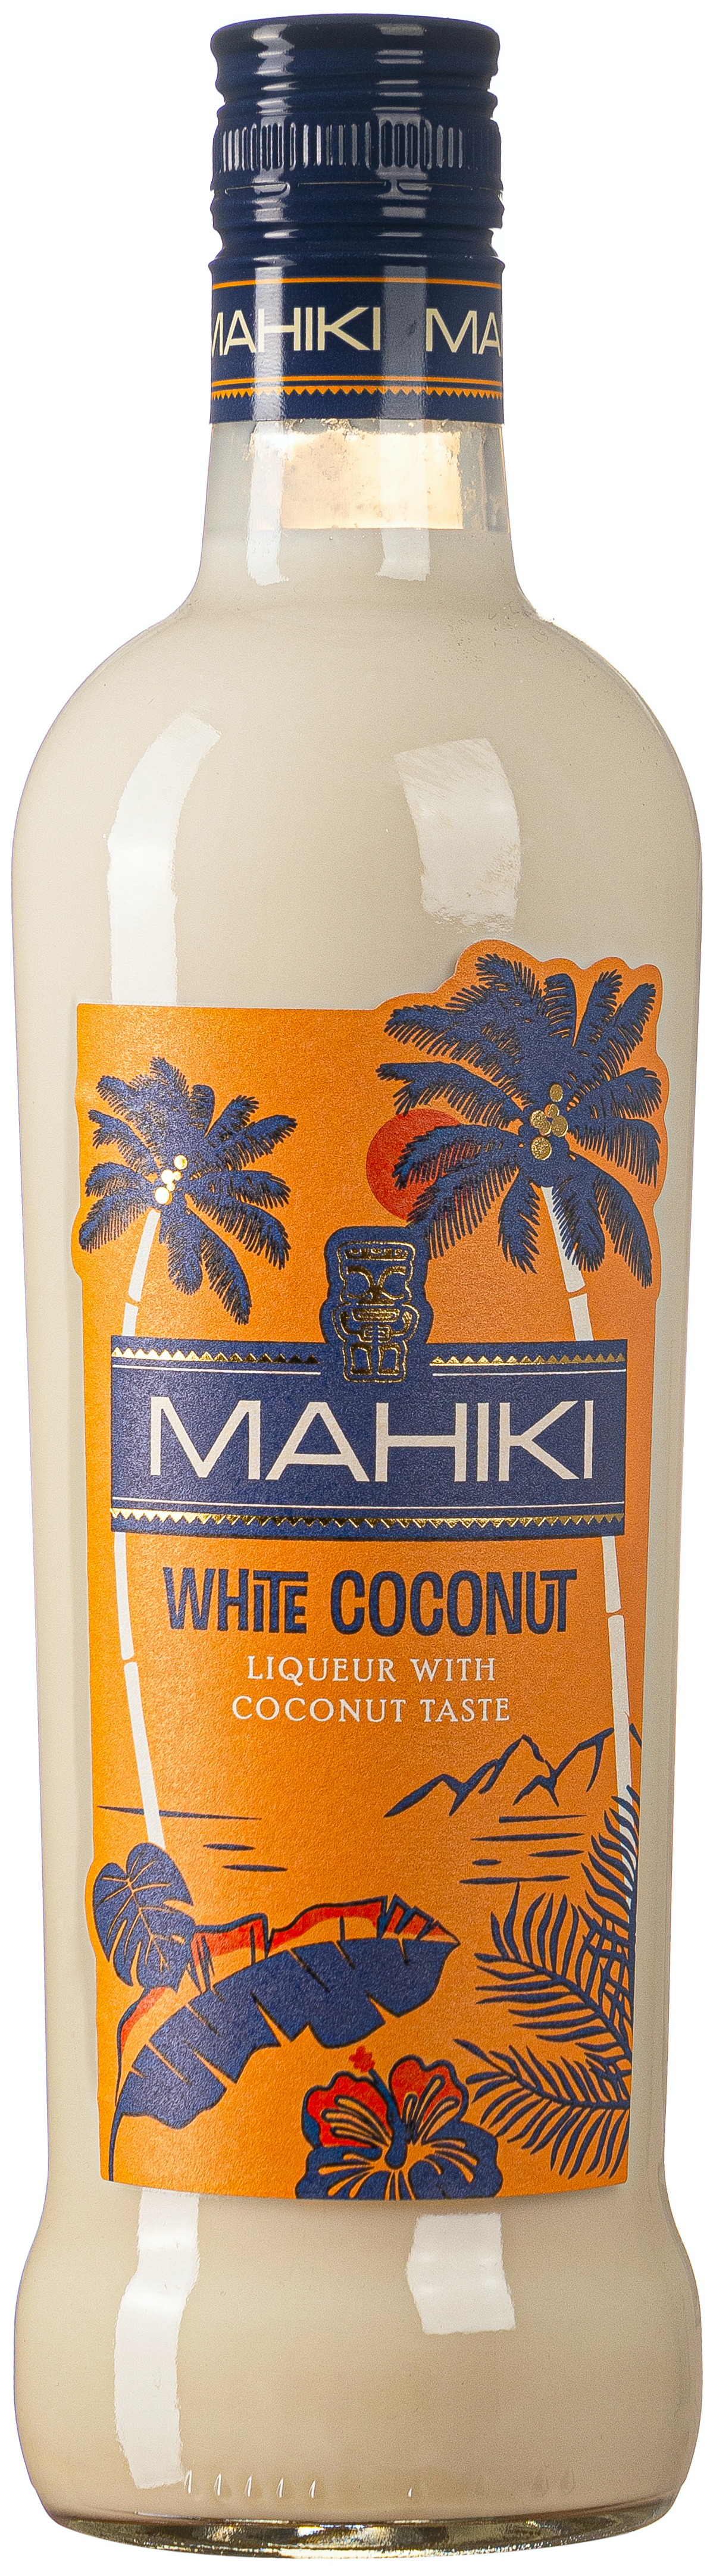 Mahiki White Coconut 16% vol. 0,7L